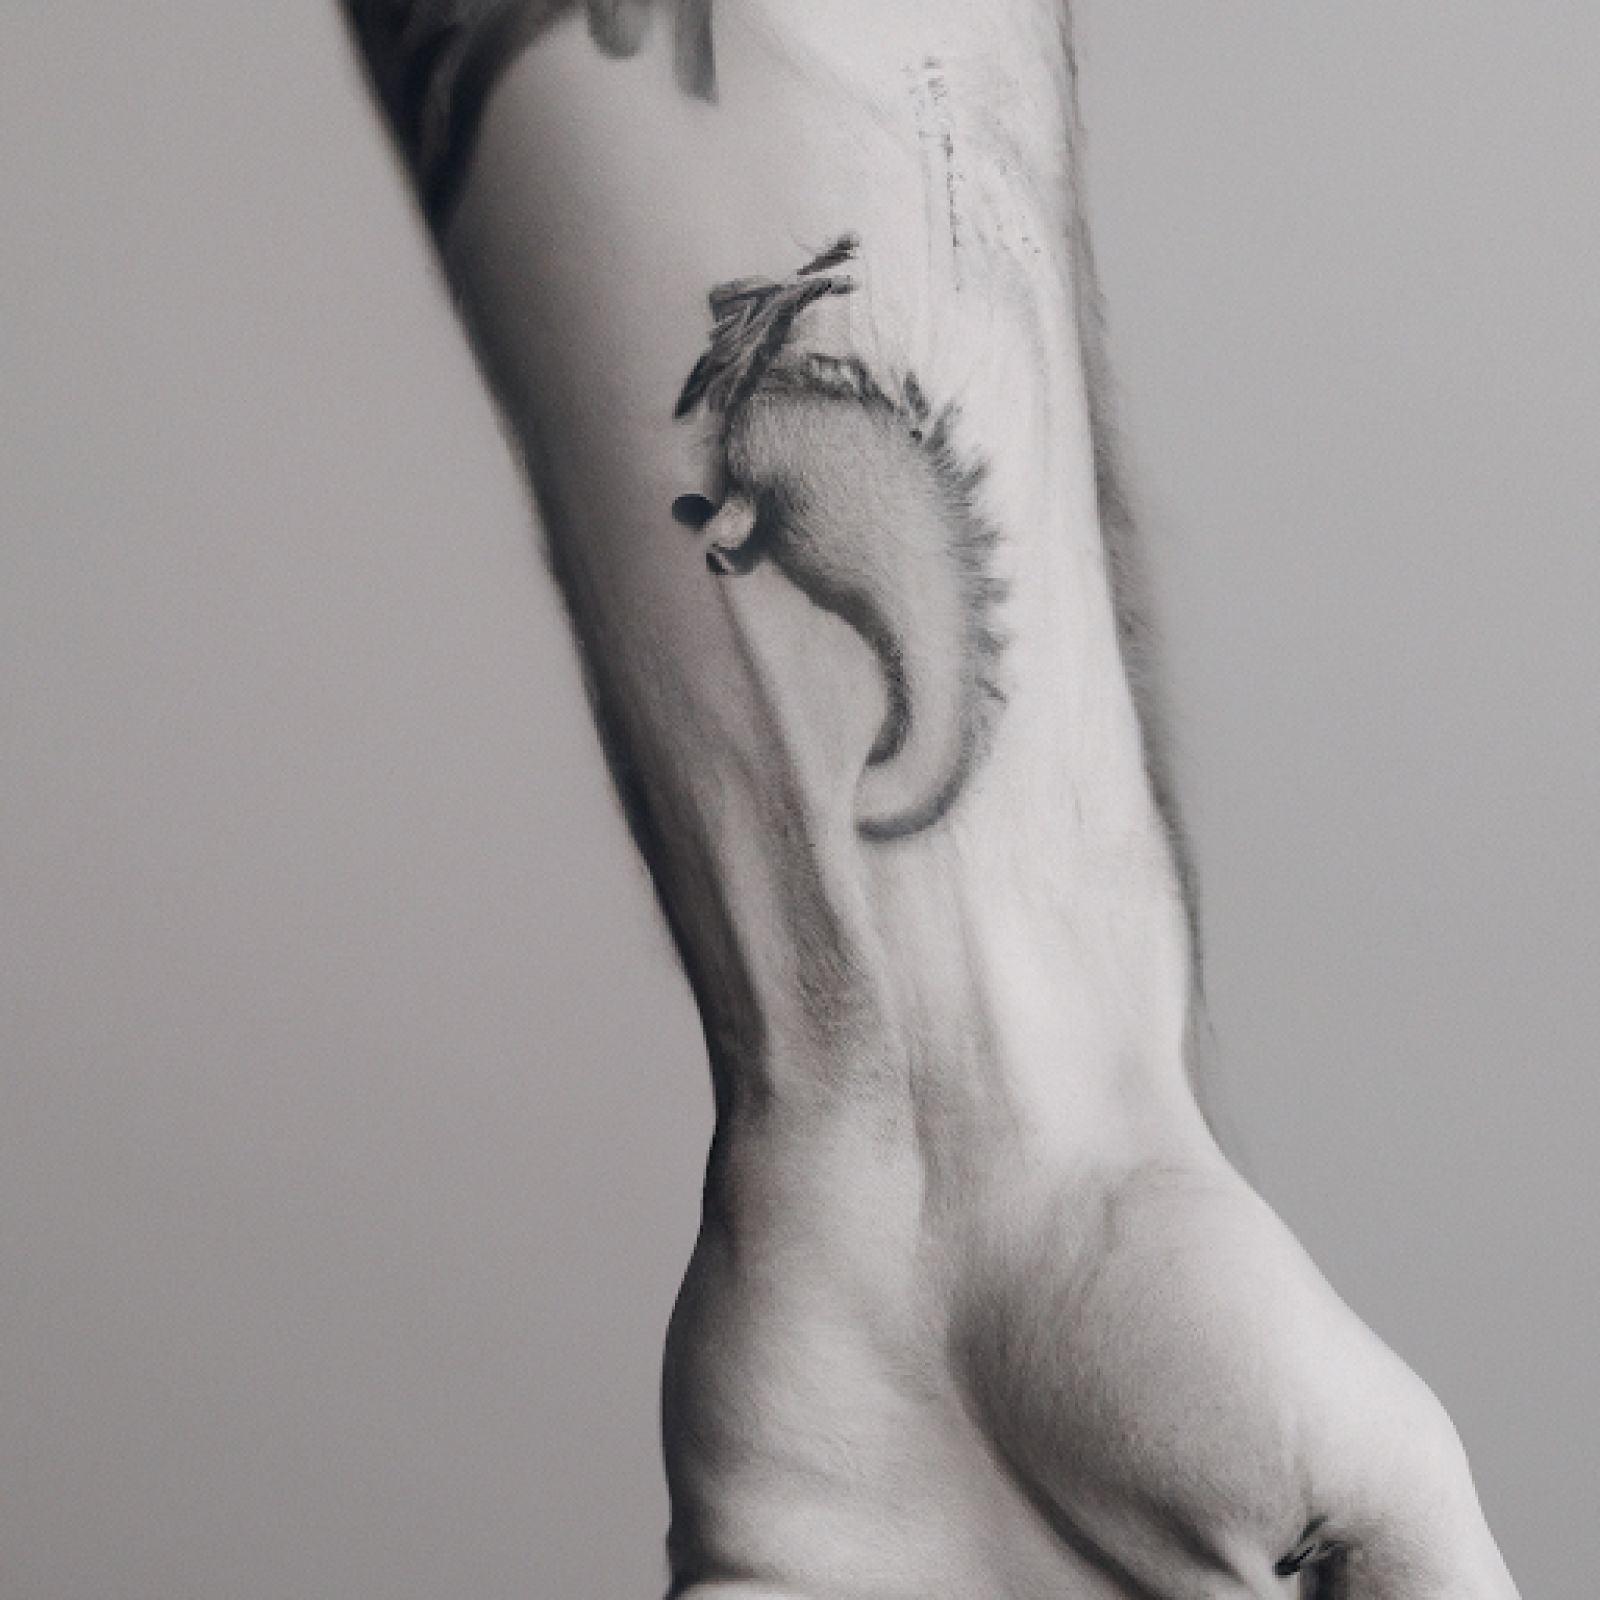 Dragon tattoo on wrist for men